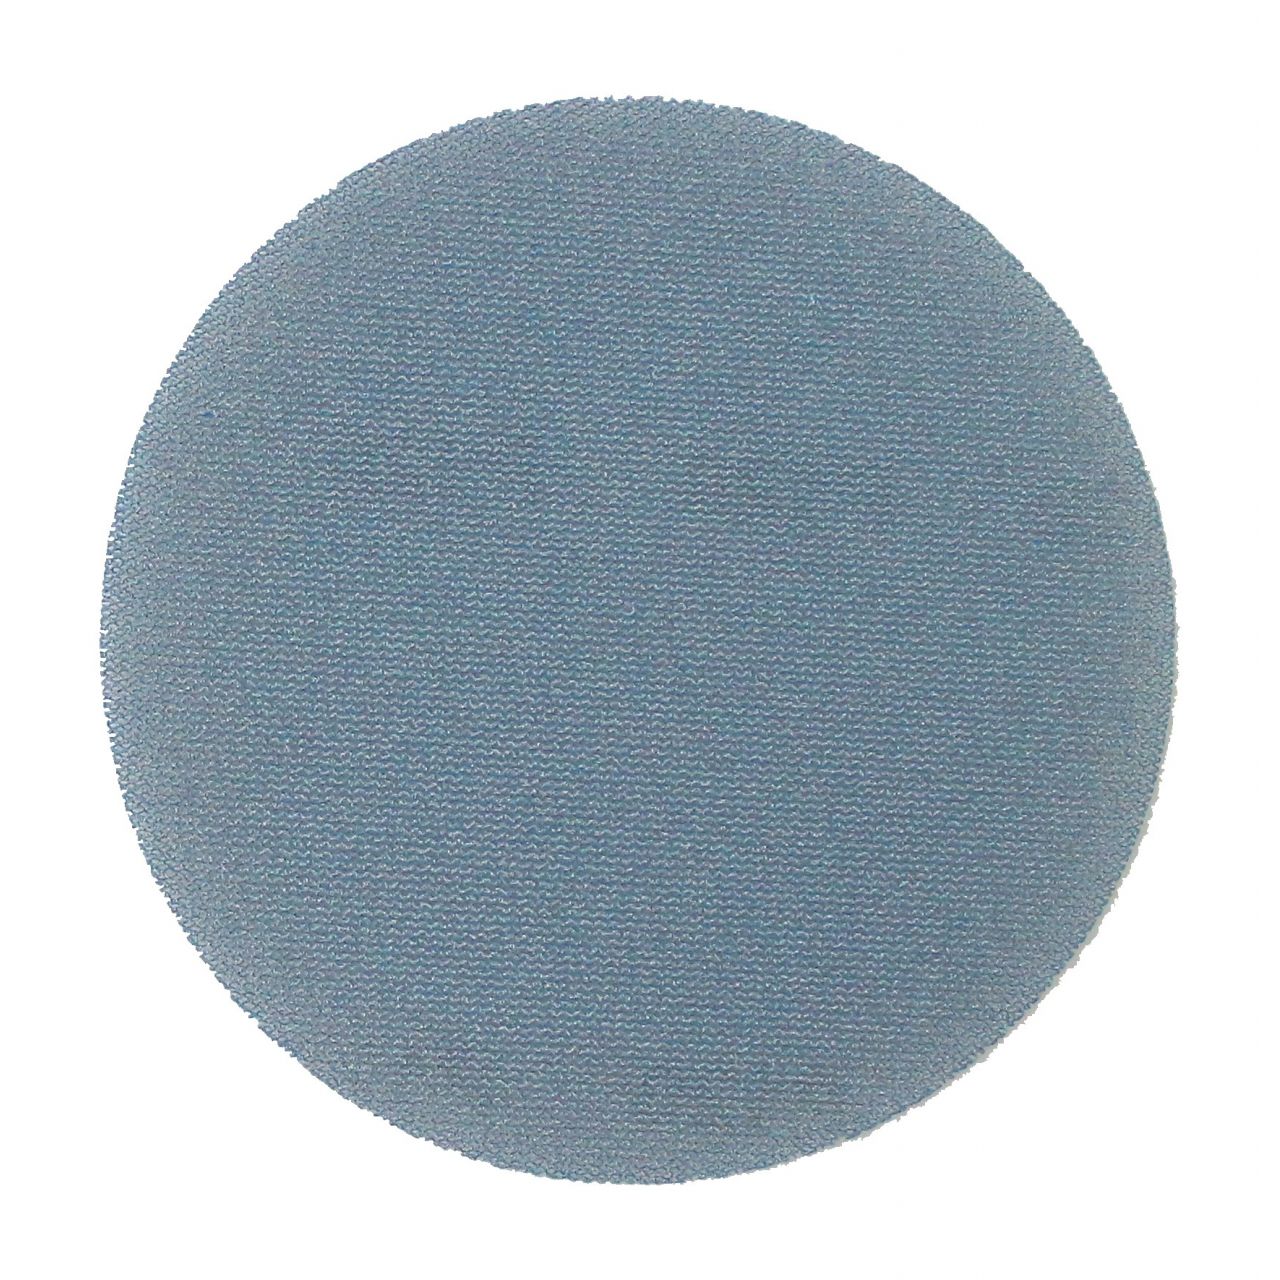 50 Discos de malla abrasiva autoadherente azul MAB (150/240)